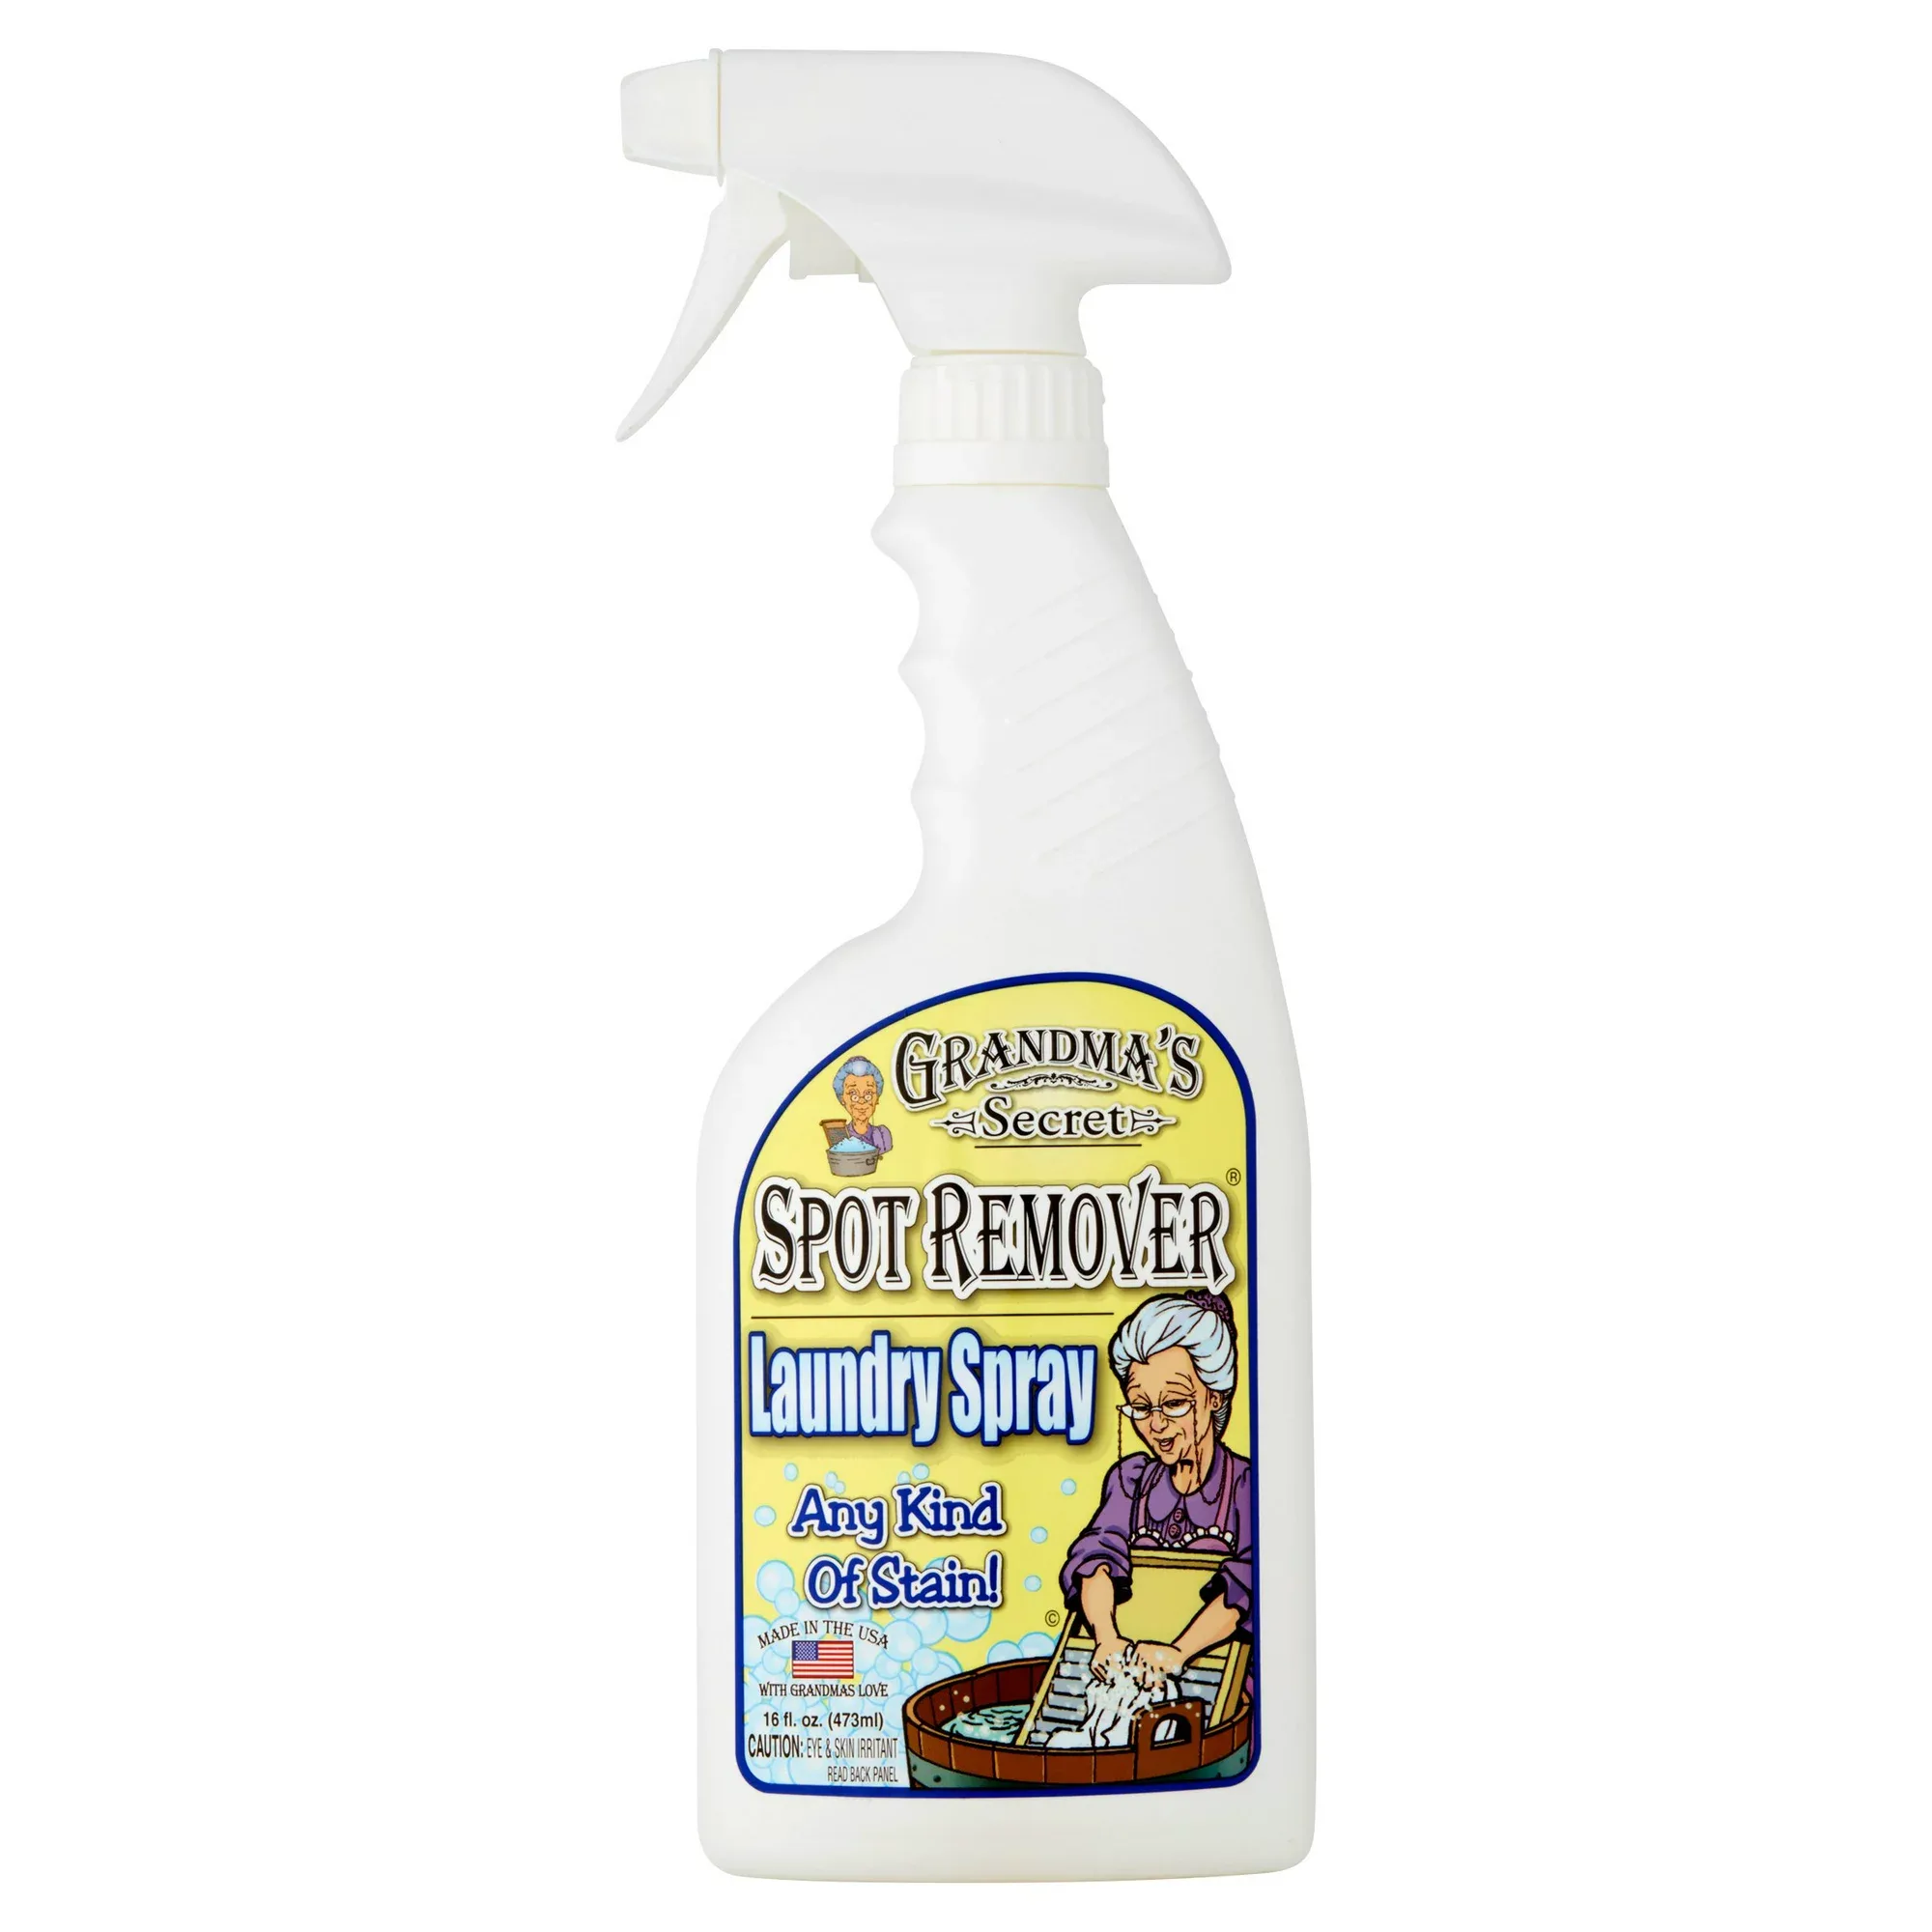 Resolve Spray 'n Wash Pre-Treat Stain Remover 22 oz Reviews 2024